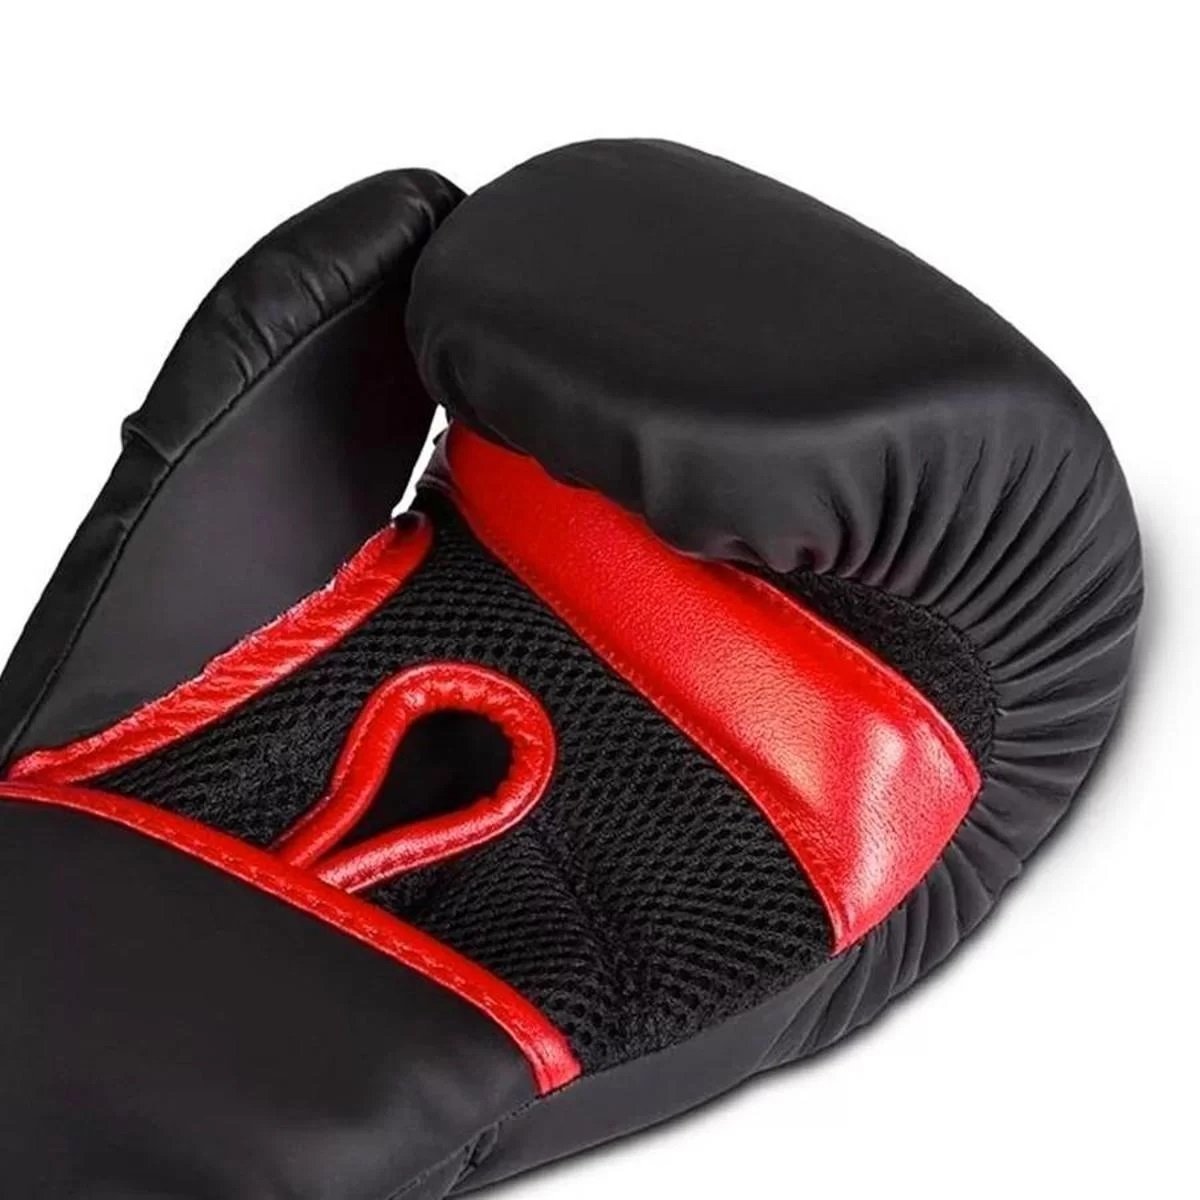 Kit Luva de Boxe Muay Thai - Naja Black Preto/vermelho + Bandagem+bucal:16/preto/vermelho - 10